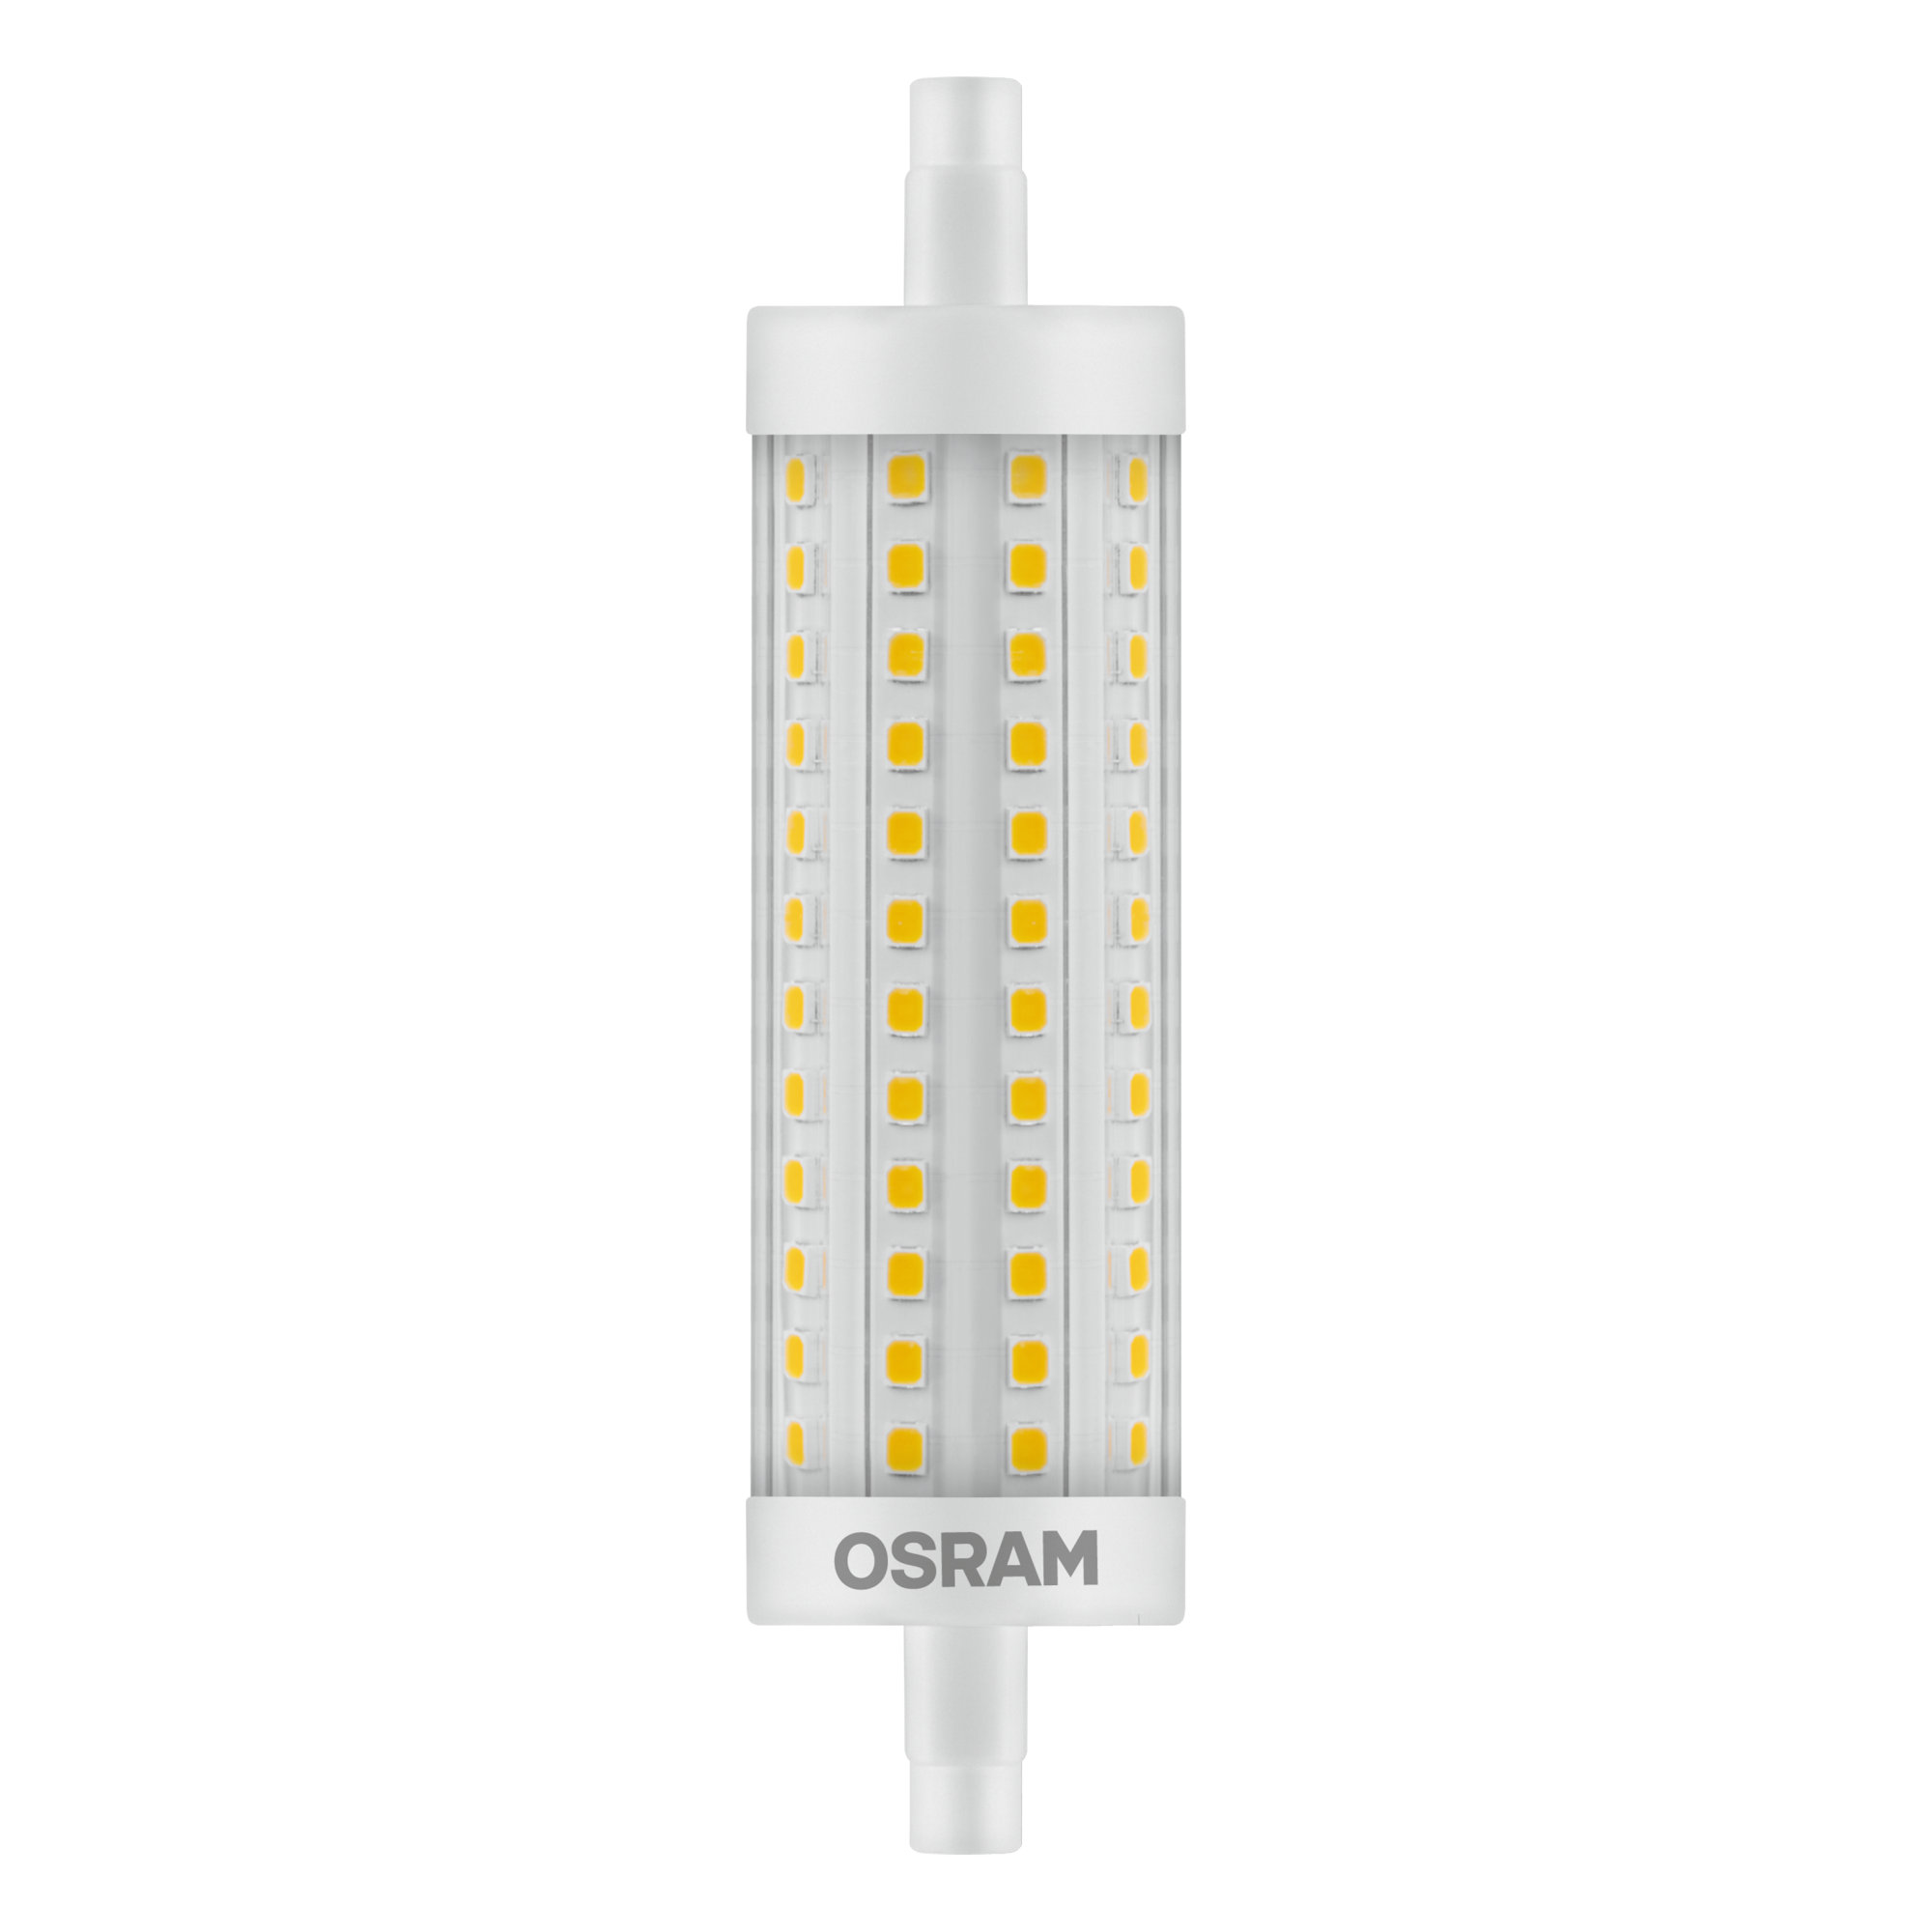 Osram LED STAR  LINE 118  HS 125 non-dim  15W 827 R7S 118mm 2000lm 2700K